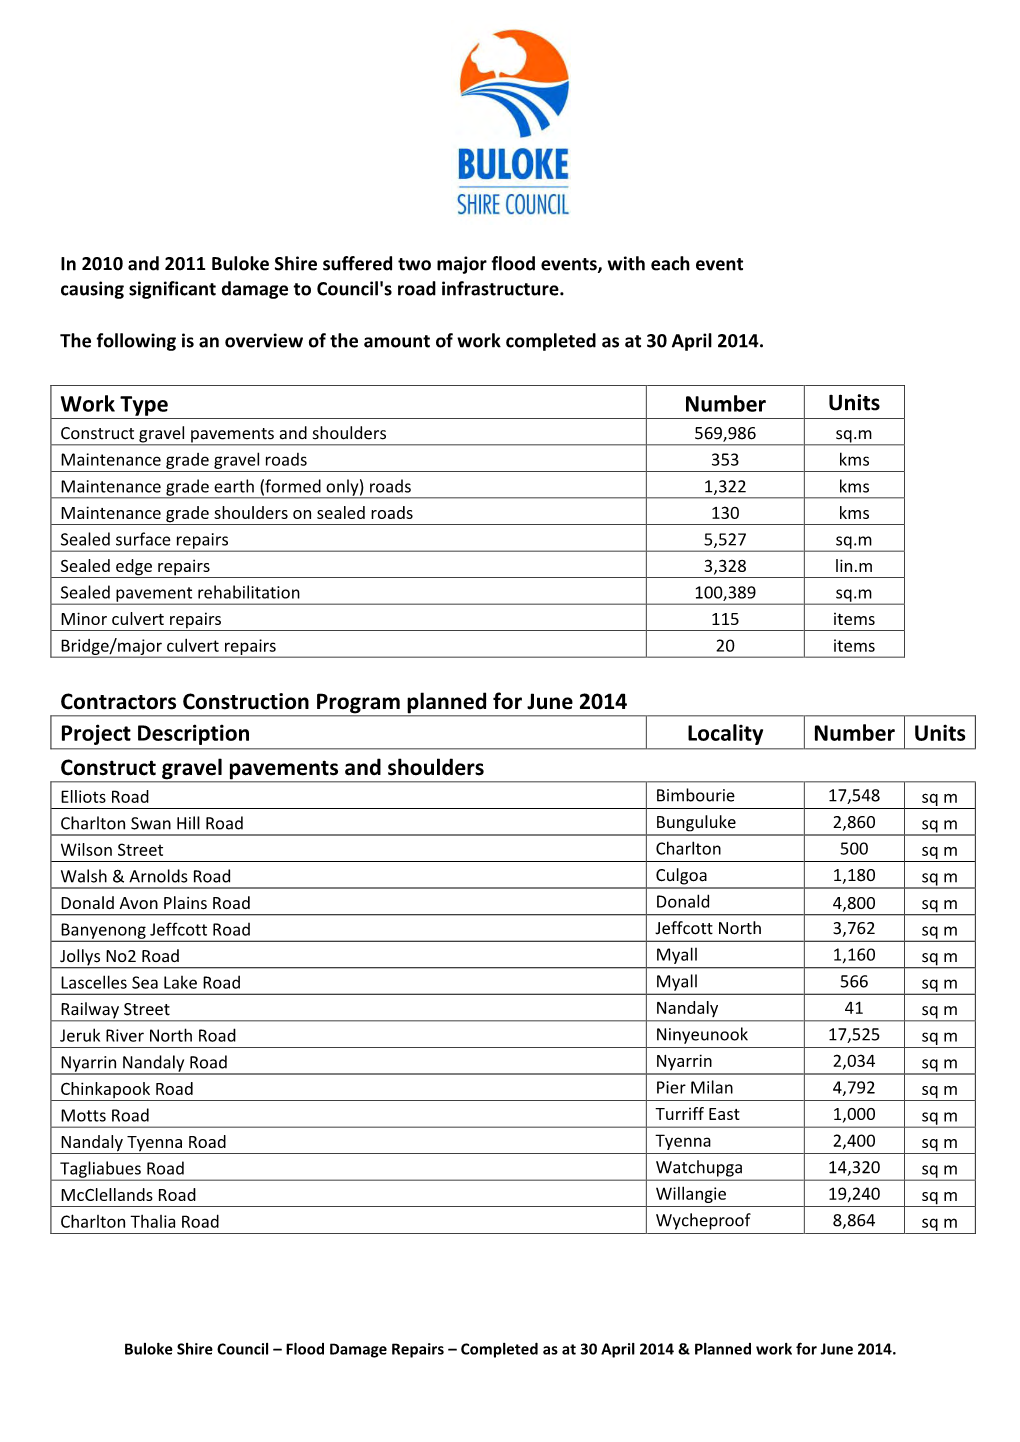 Work Type Number Units Contractors Construction Program Planned for June 2014 Project Description Locality Number Units Construc